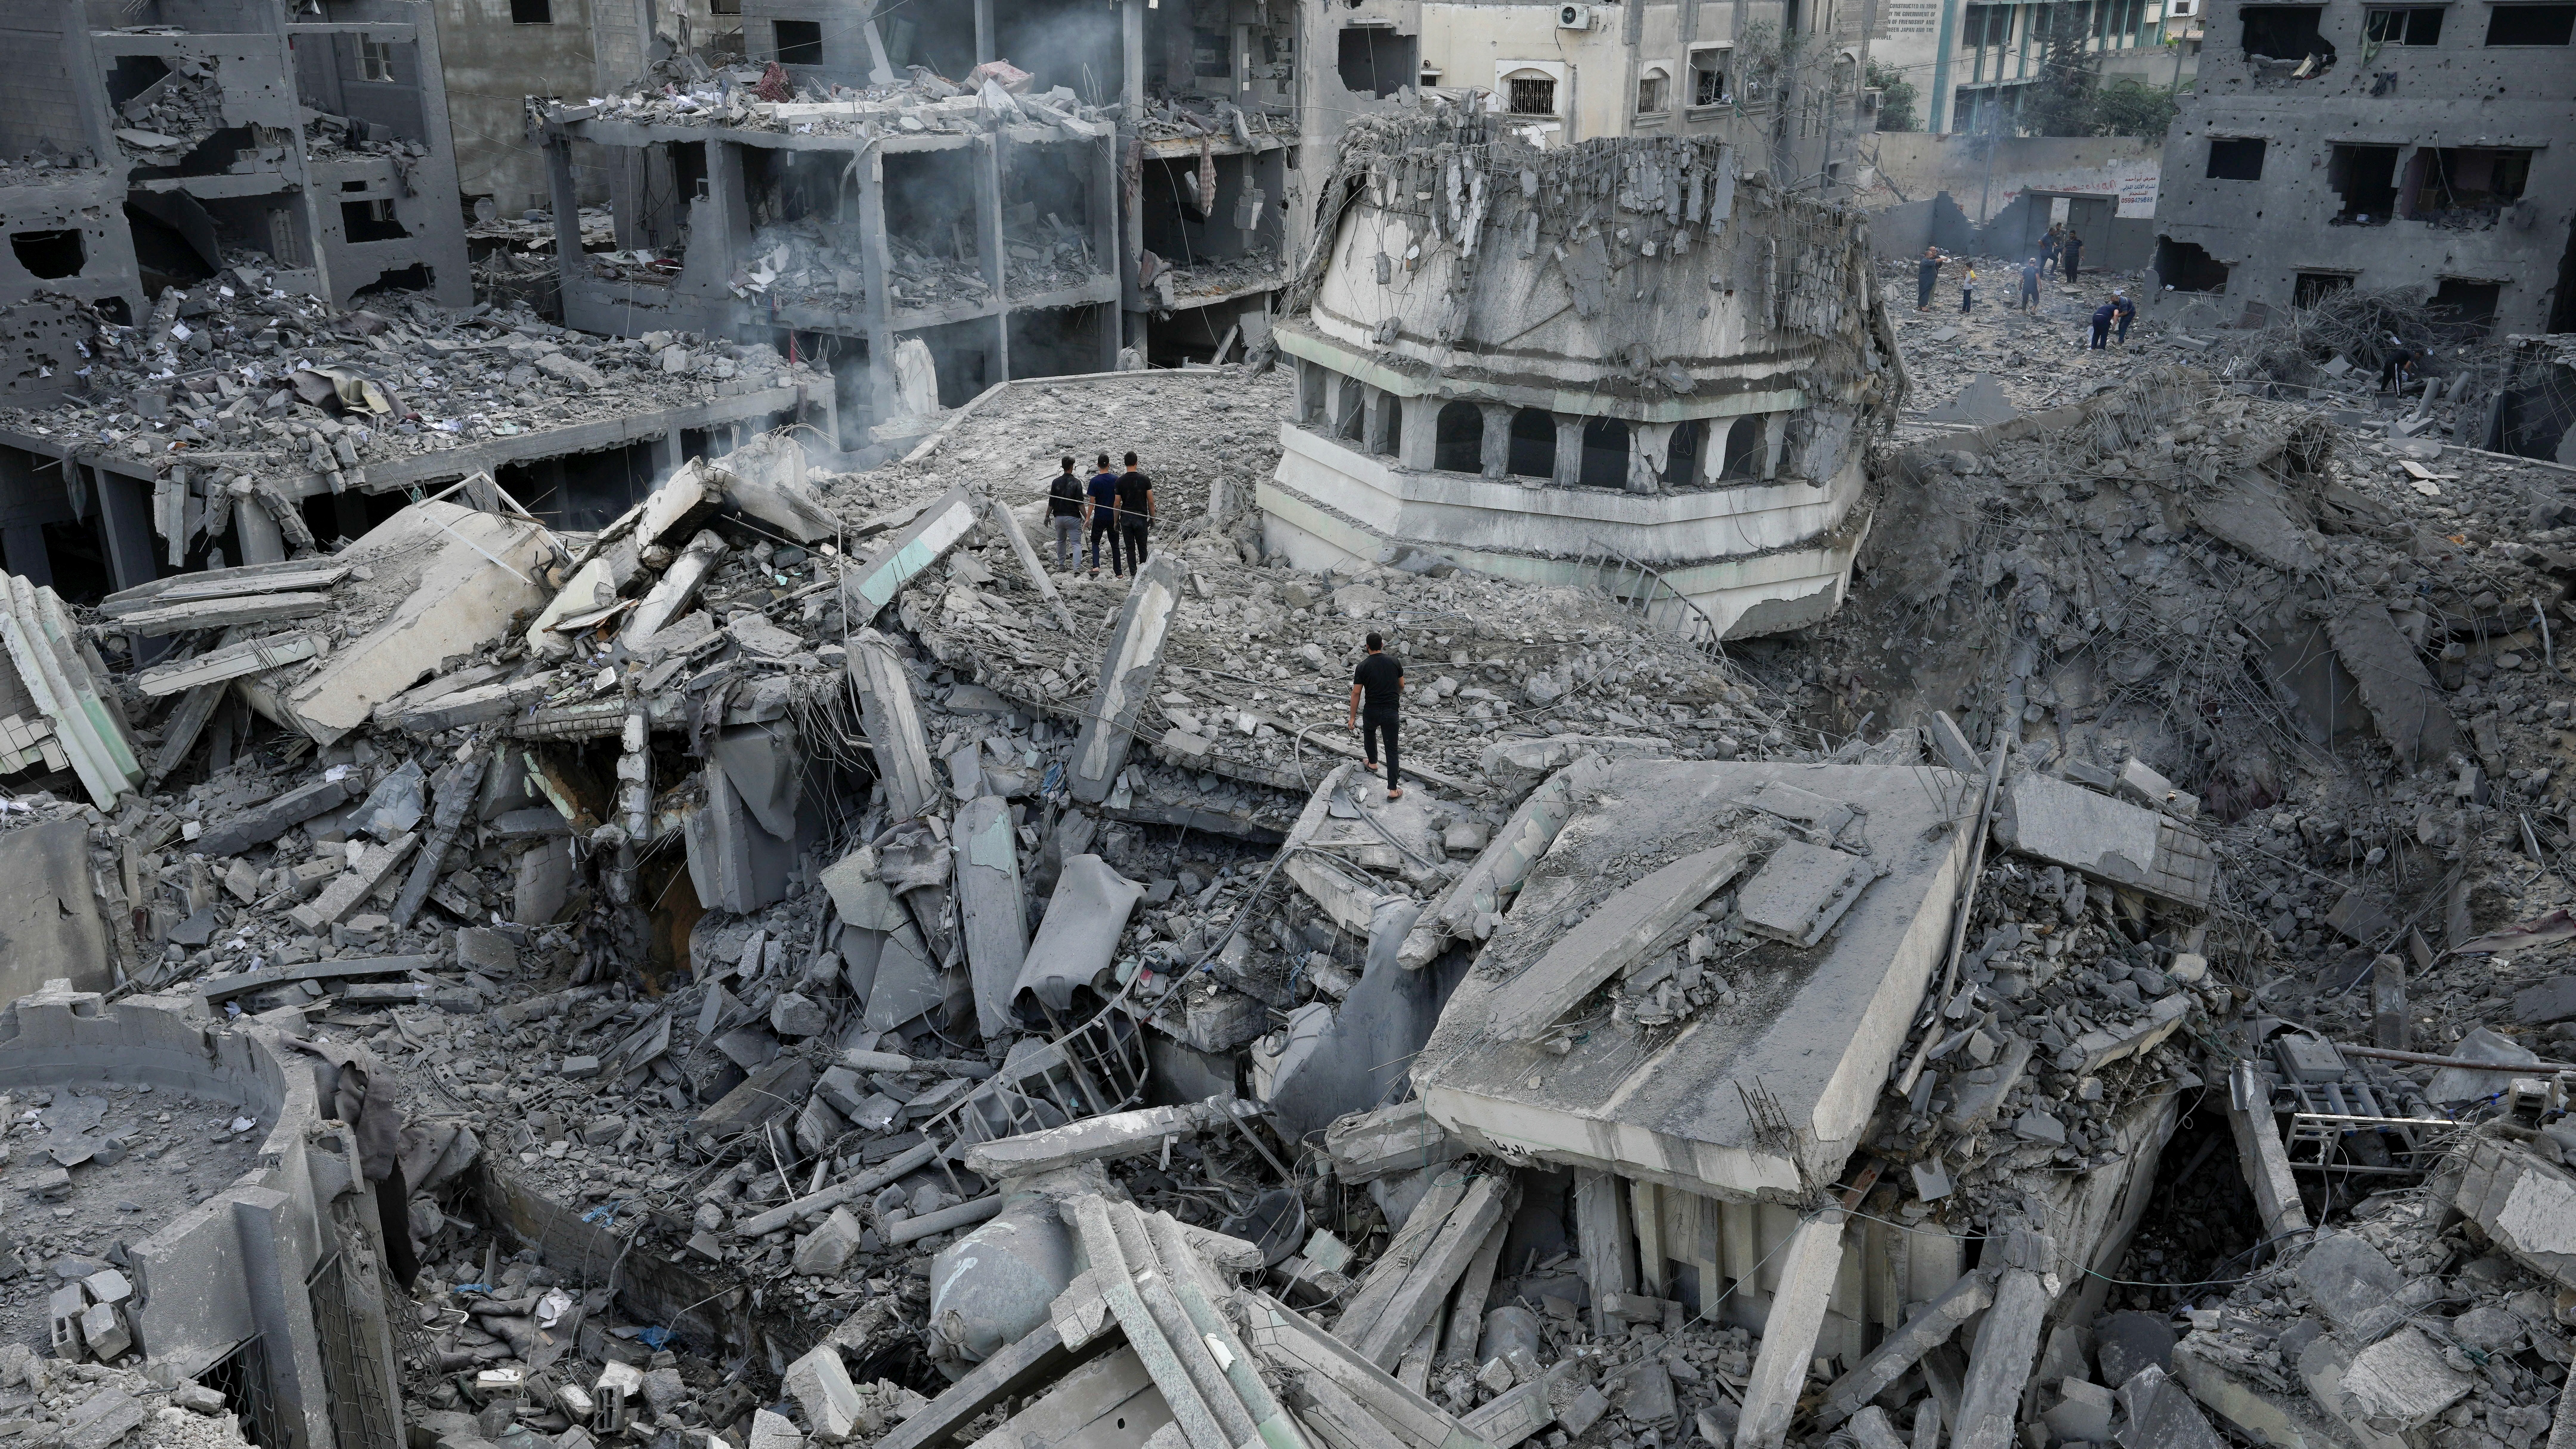 Scenes of devastation following Israeli air strikes in Gaza